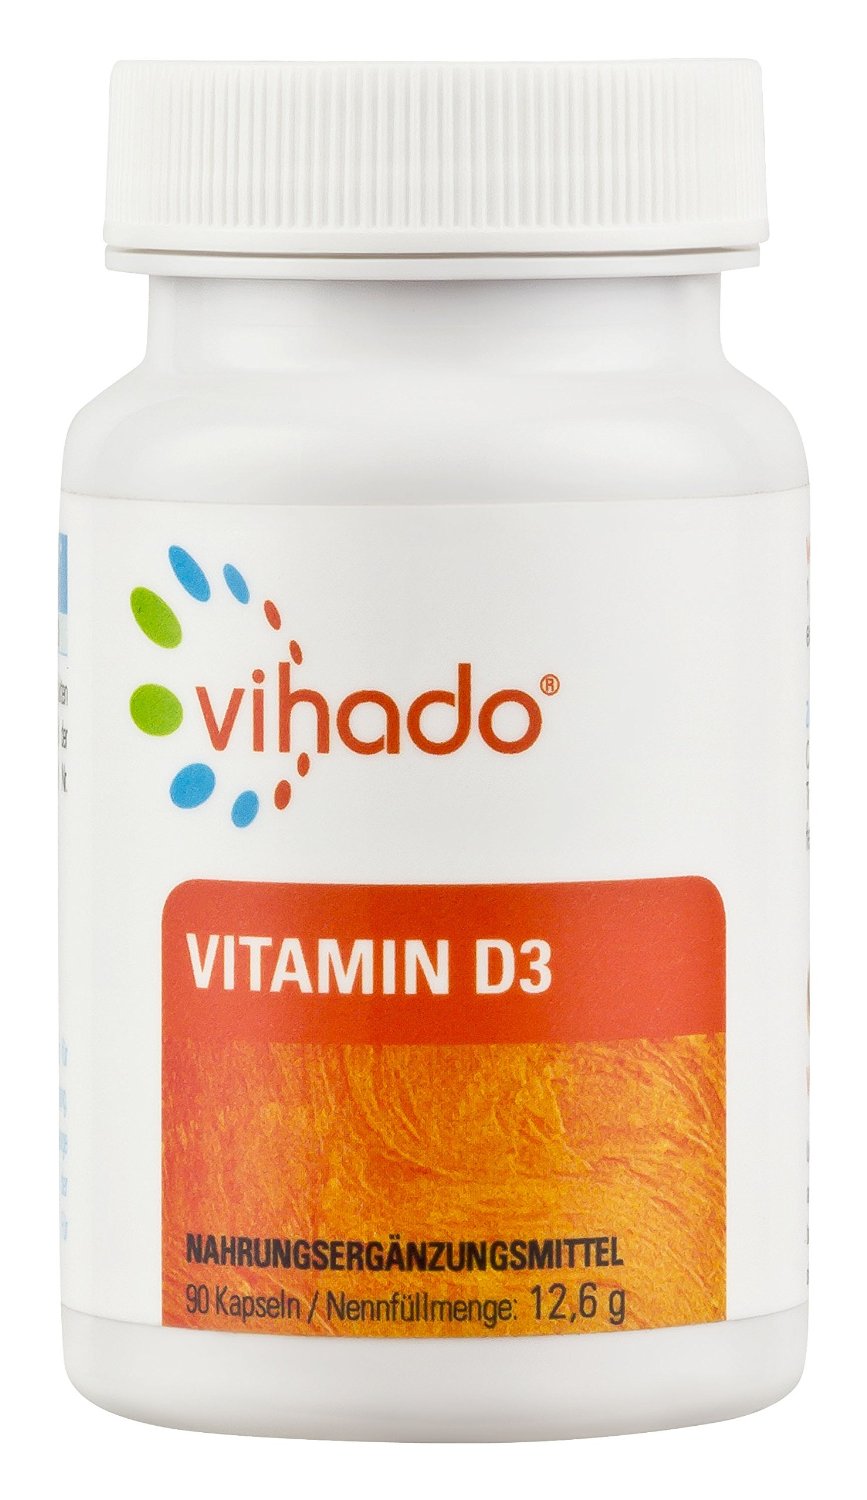 Vitamin D3